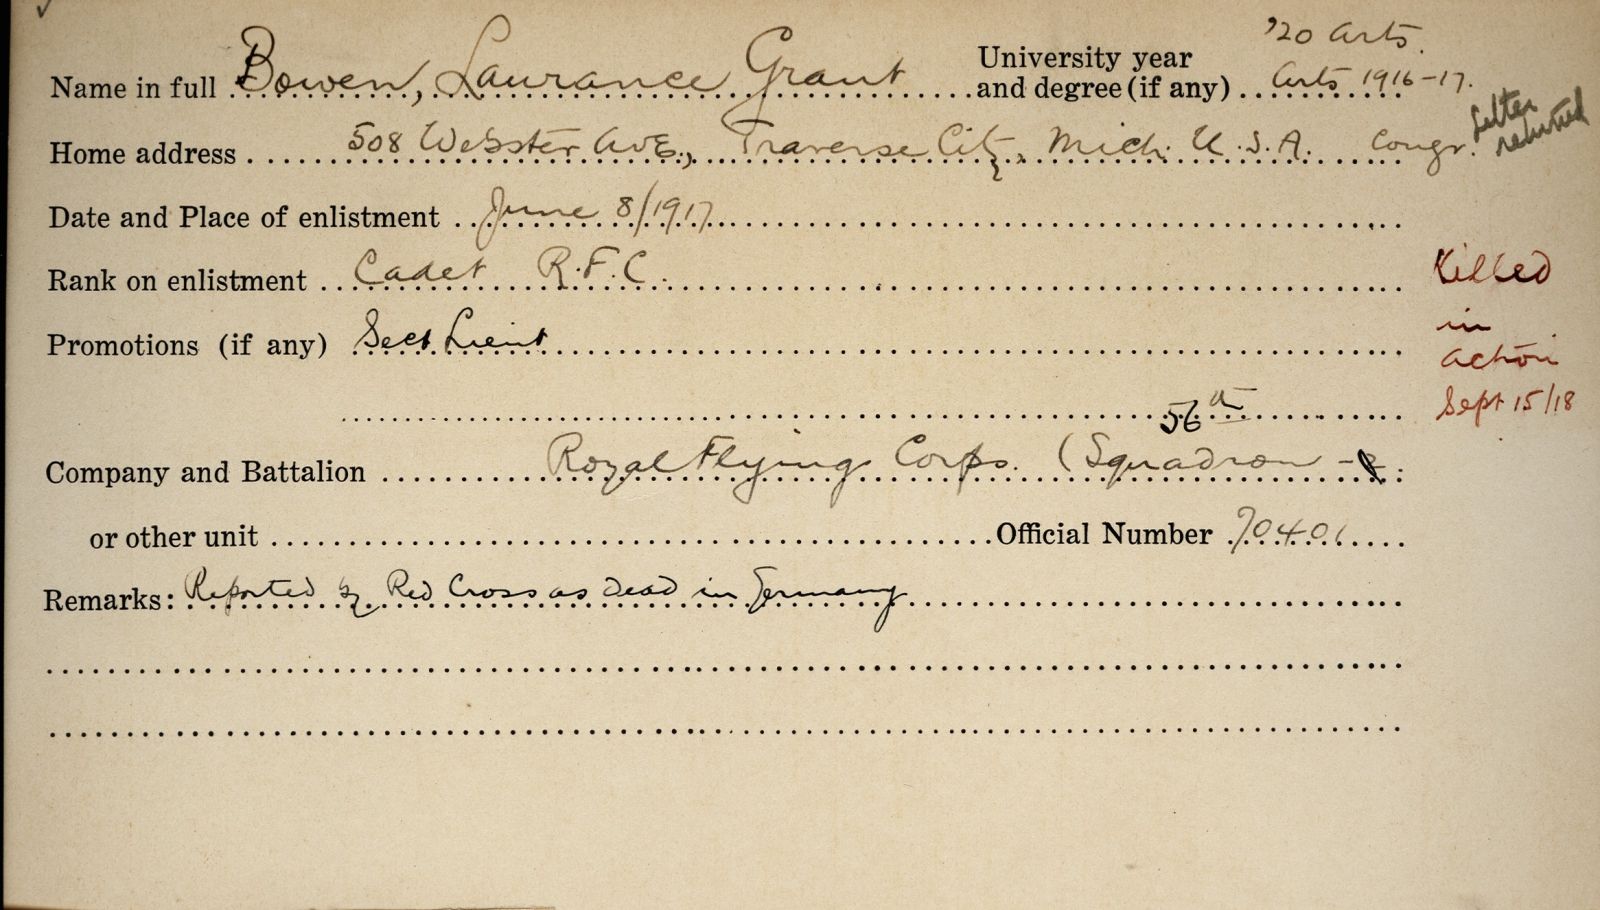 University Military Record of Bowen